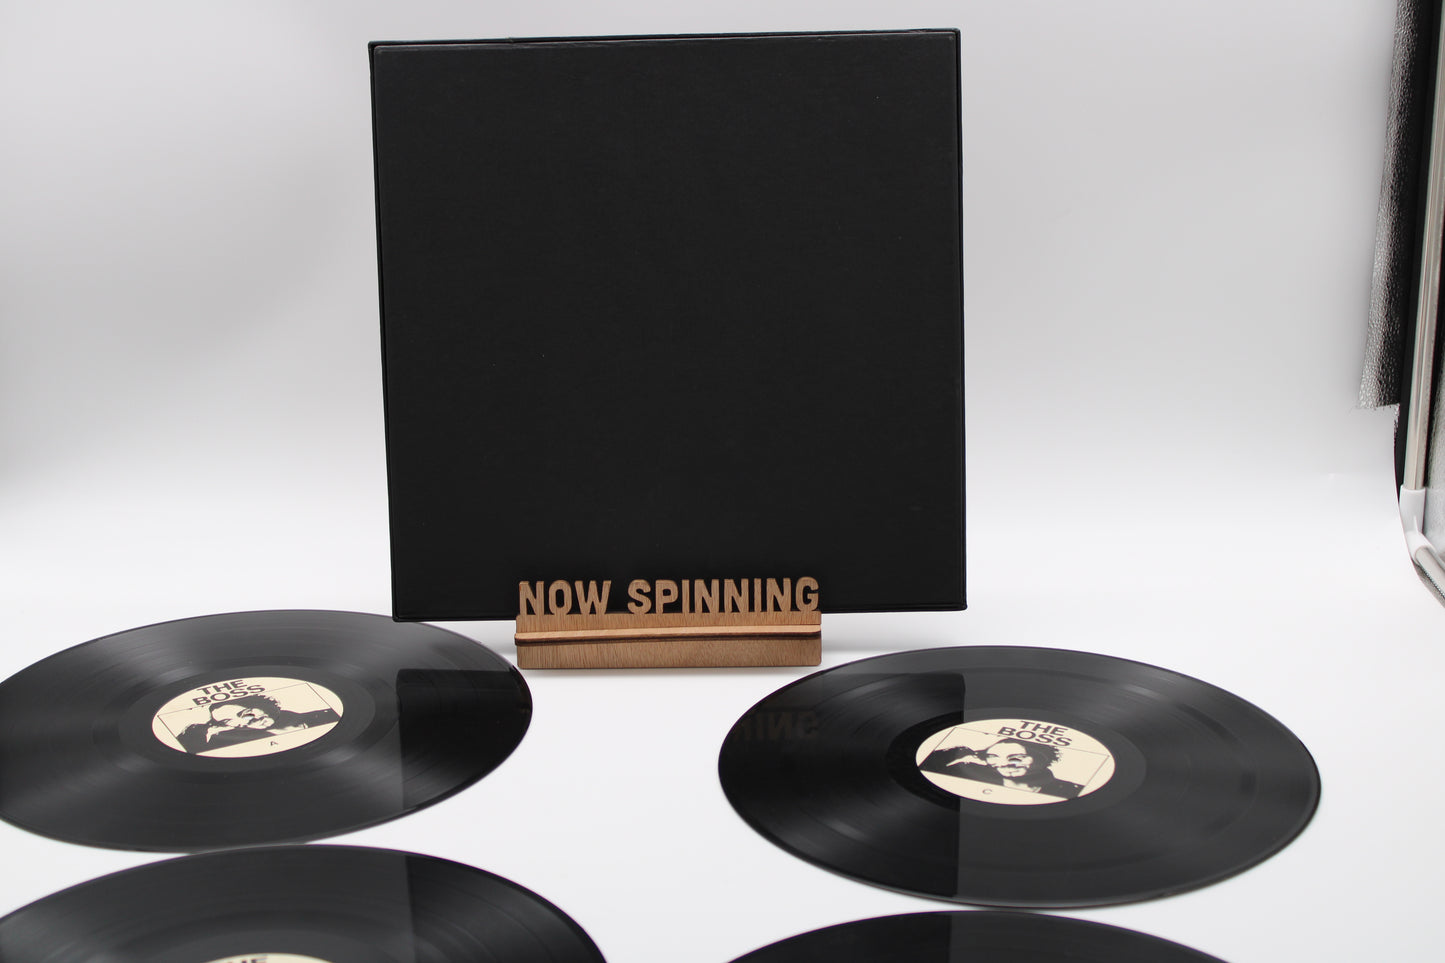 Bruce Springsteen & ESB - HE'S THE BOSS - 4 LP VINYL BOX SET - Near Mint, EX Sound Quality